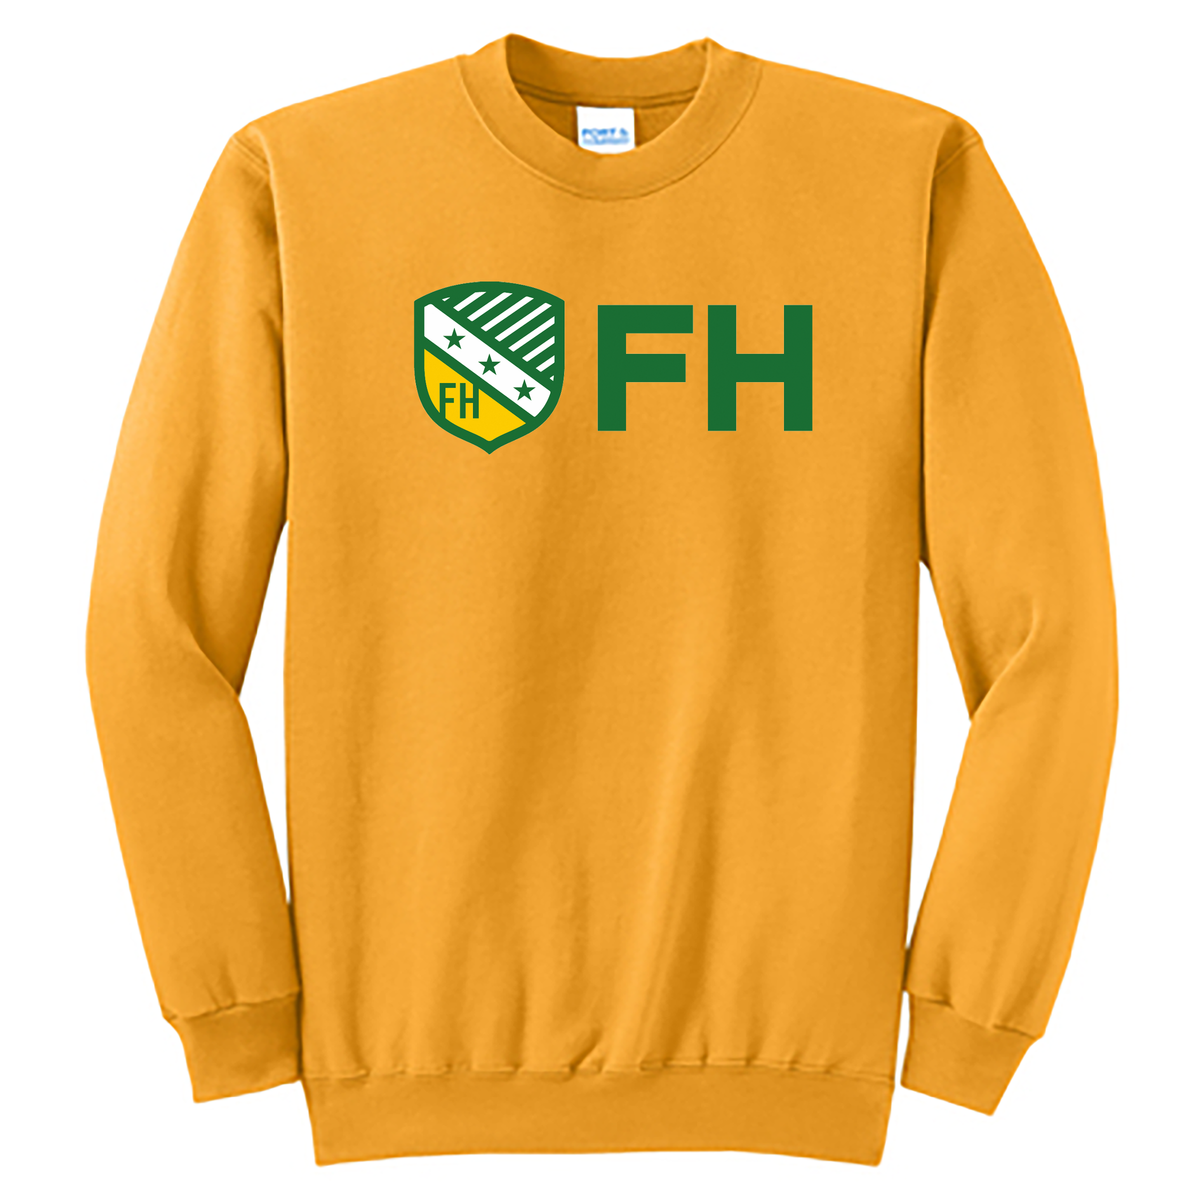 FarmHouse Fraternity Crew Neck Sweatshirt